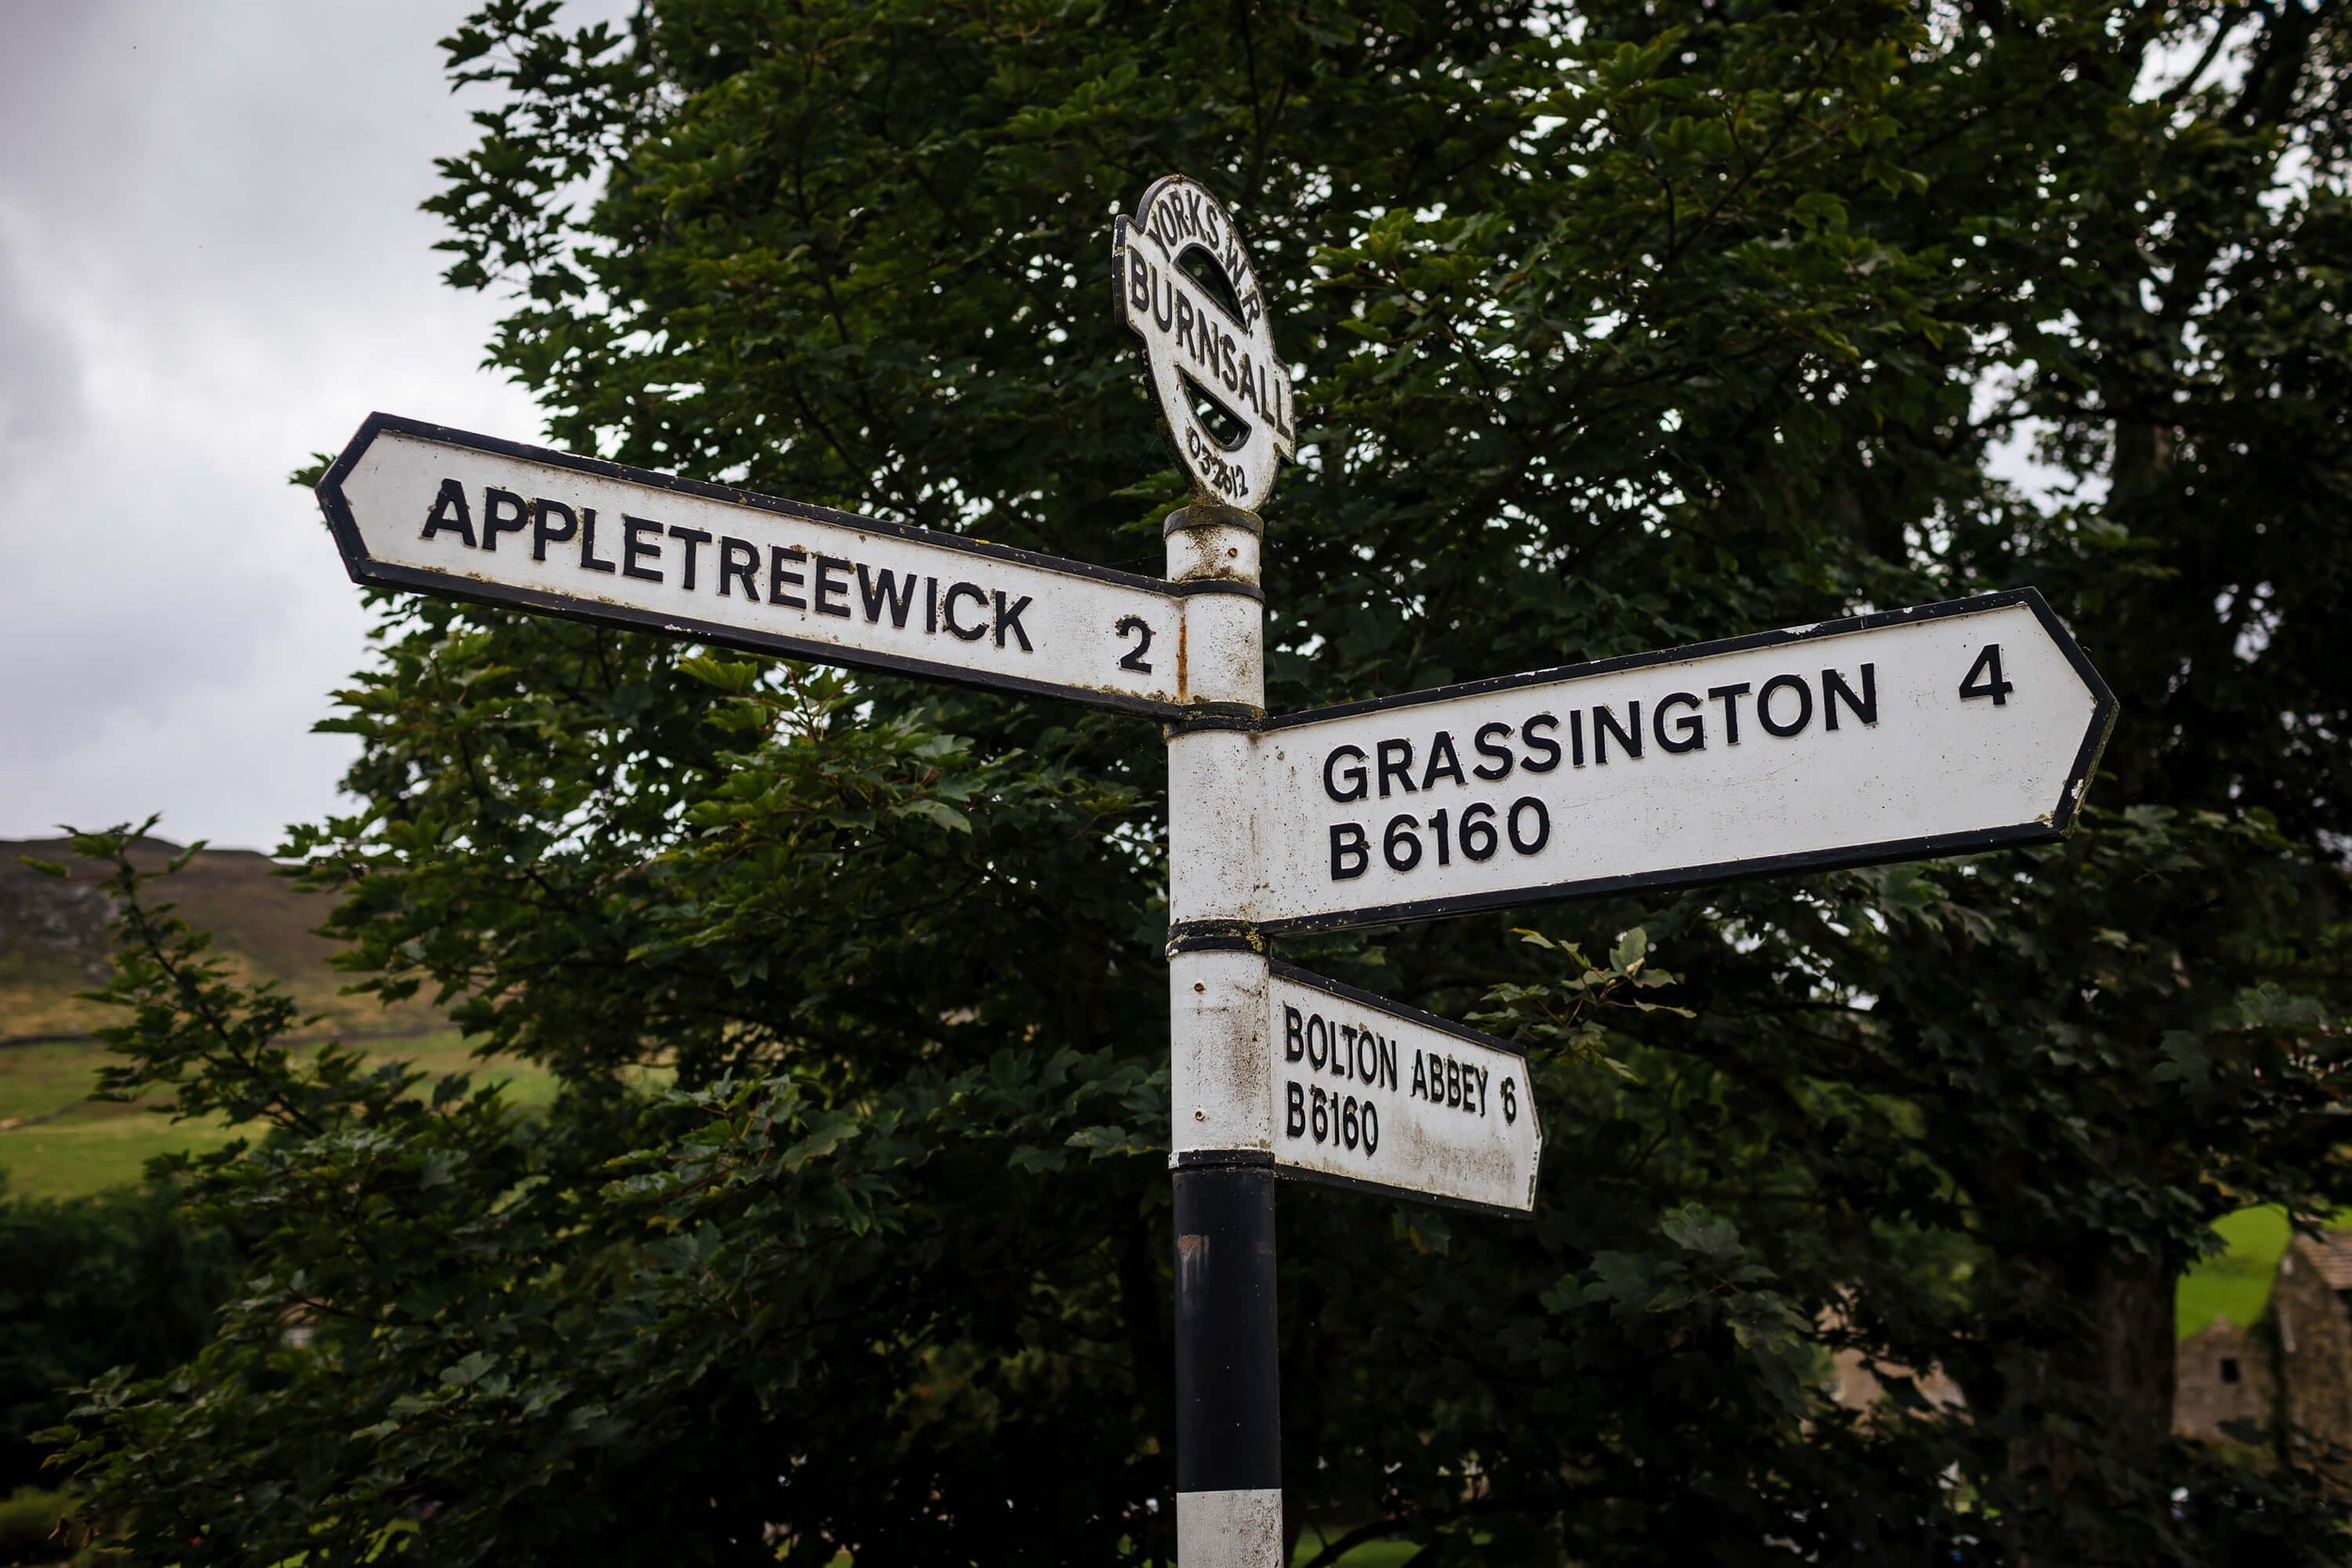 Appletreewick and Grassington road sign